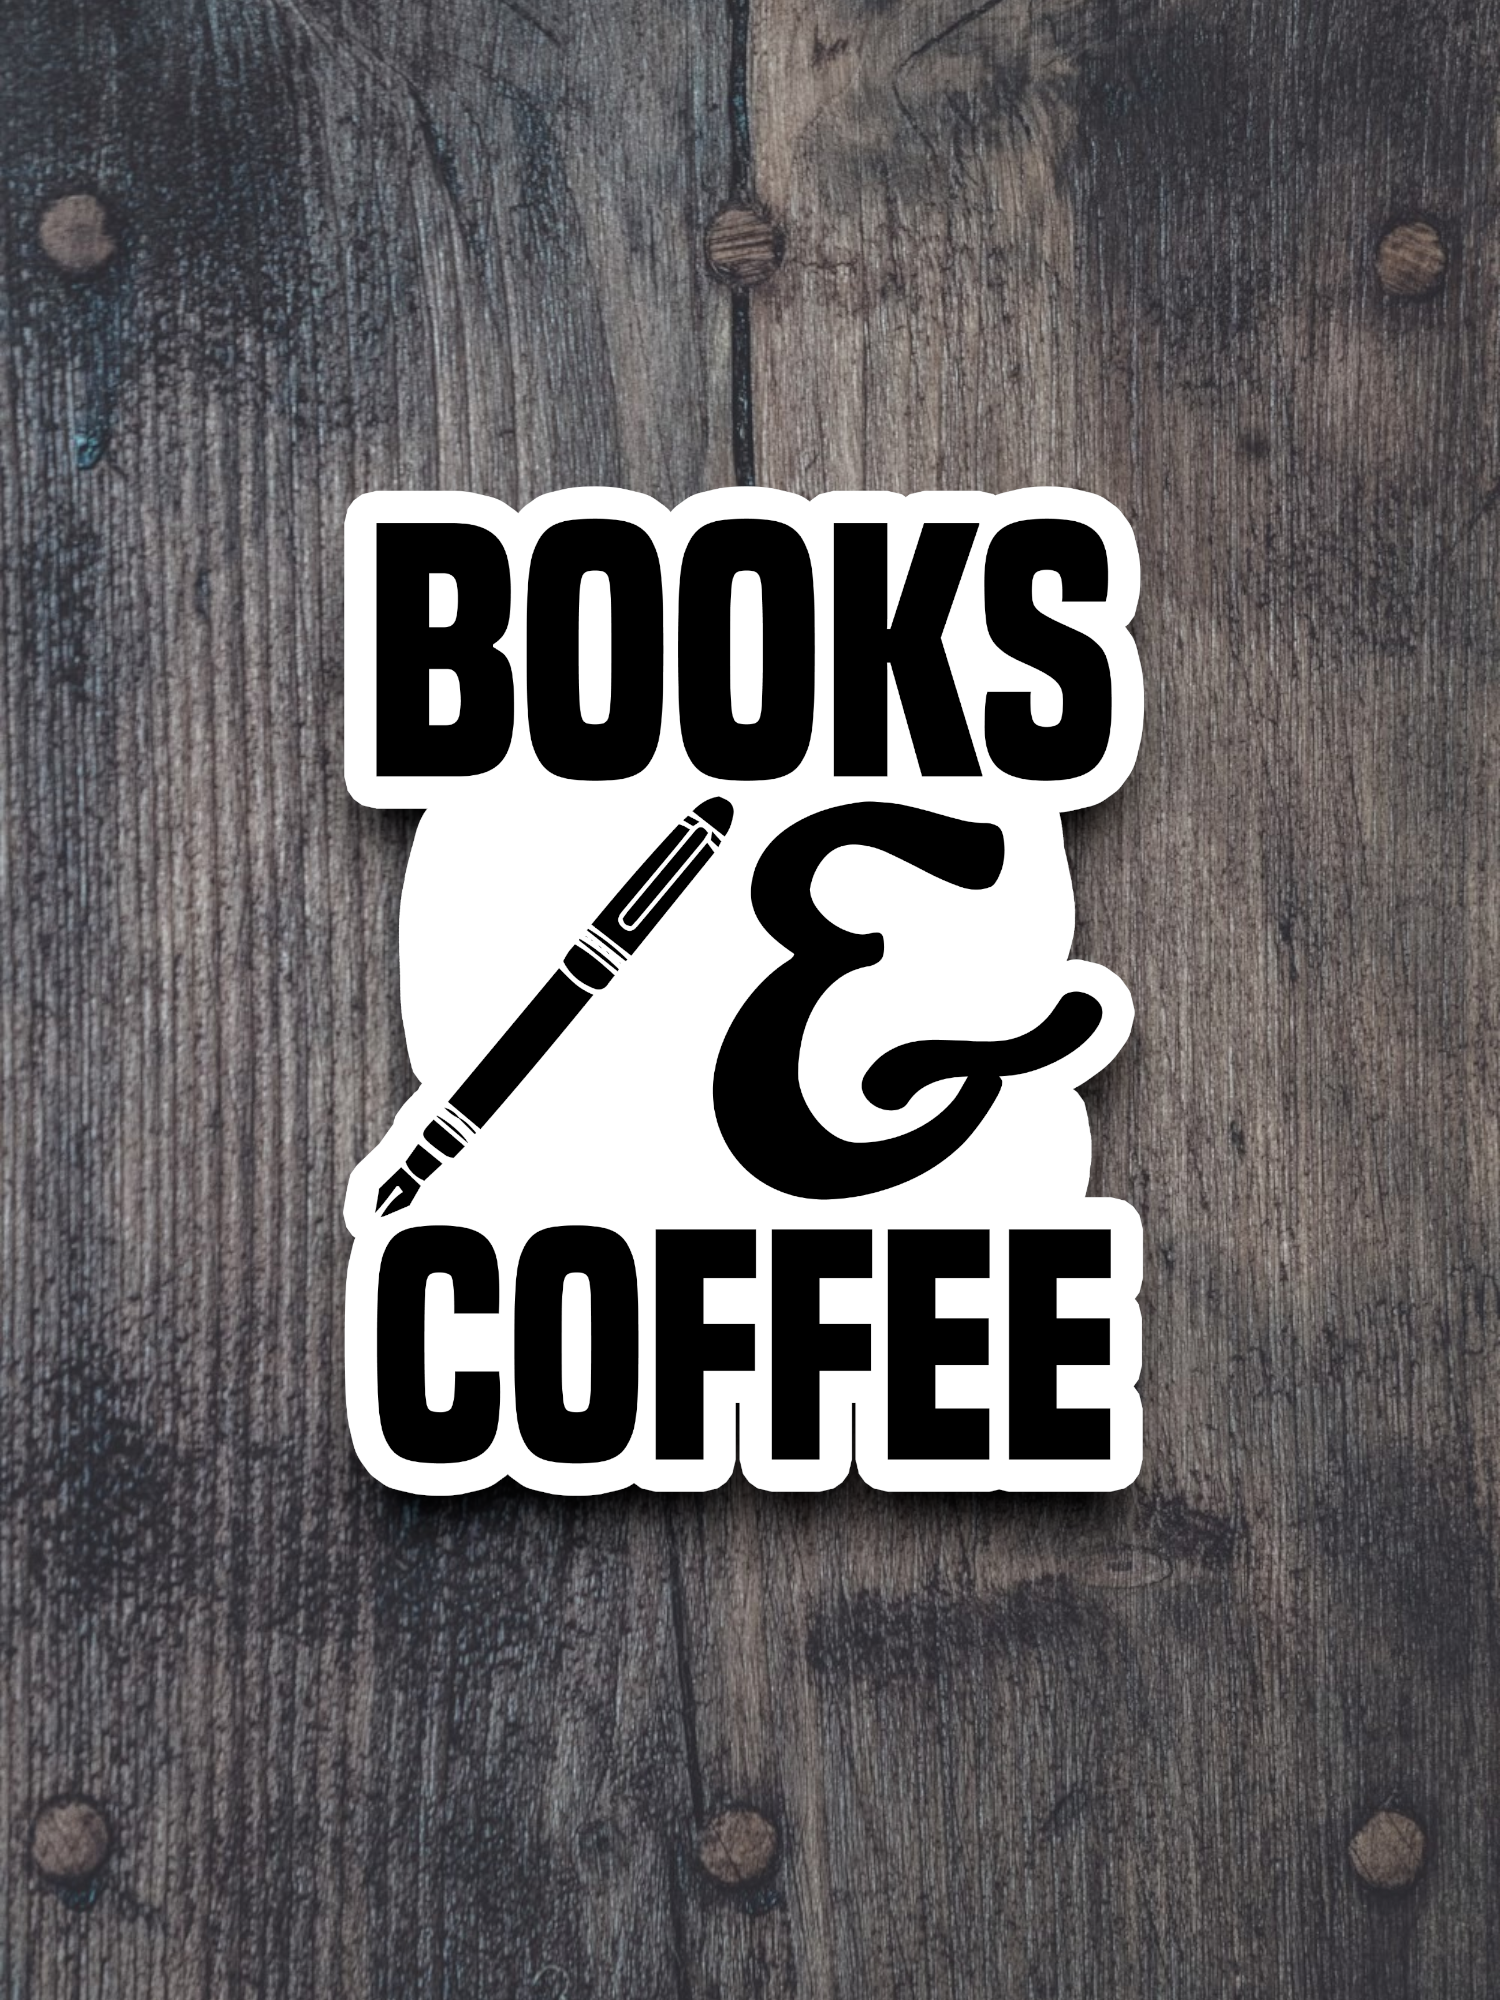 Books and Coffee  2 - Coffee Sticker